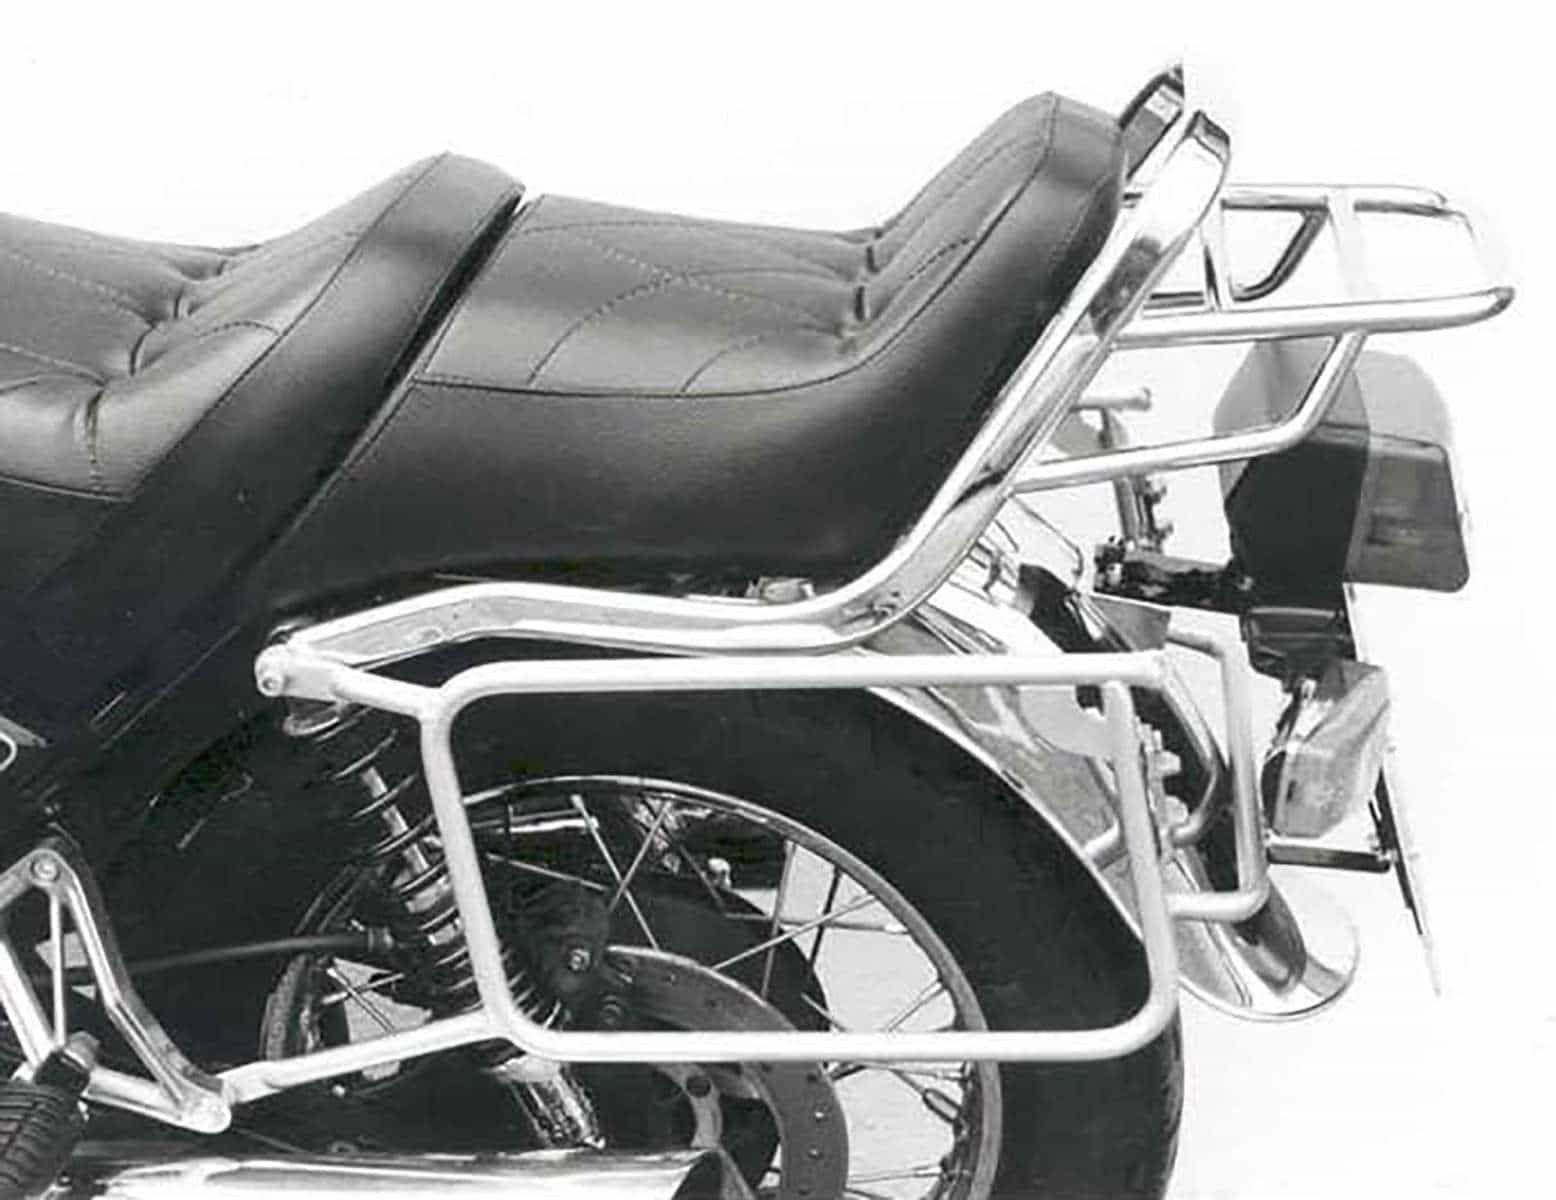 Sidecarrier permanent mounted chrome for Moto Guzzi V 65 Florida (1992-1994)